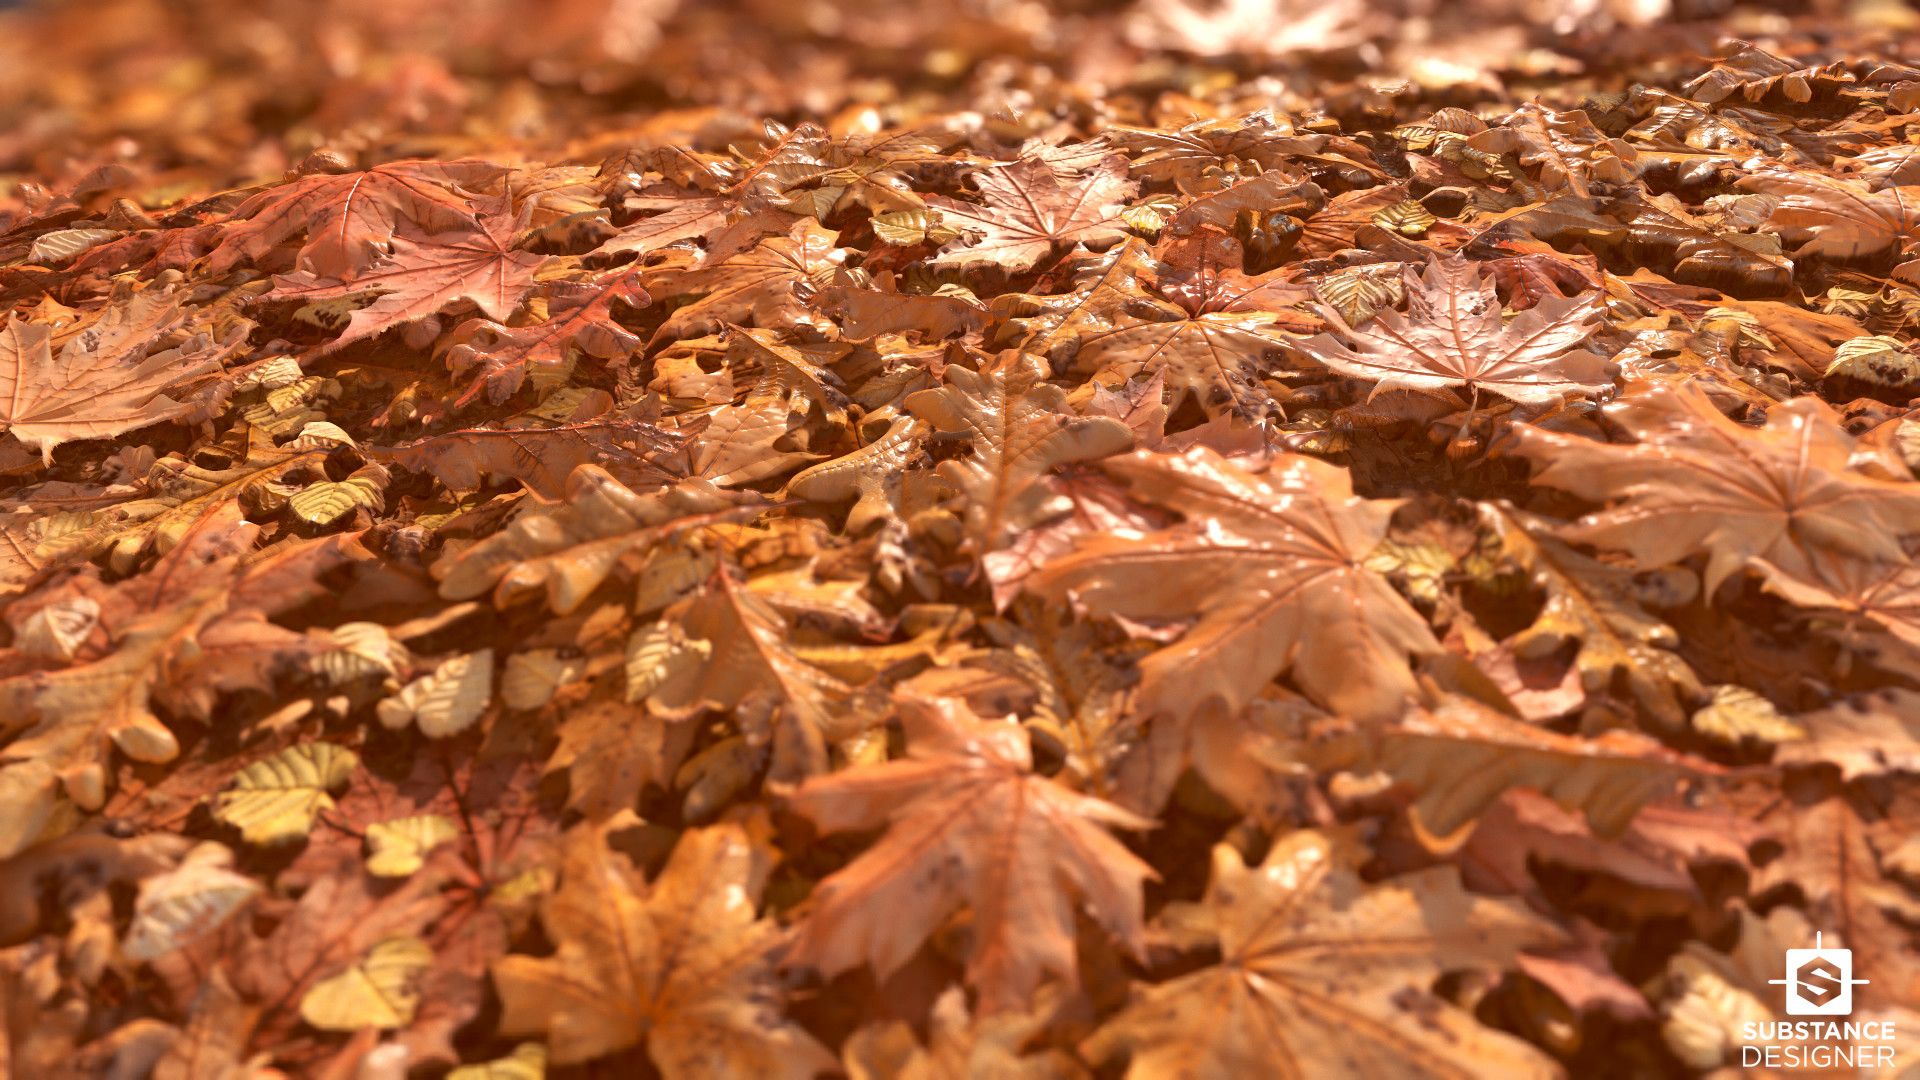 ArtStation - Fallen Autumn Leaves, Eric Wiley | Texturs | Pinterest ...